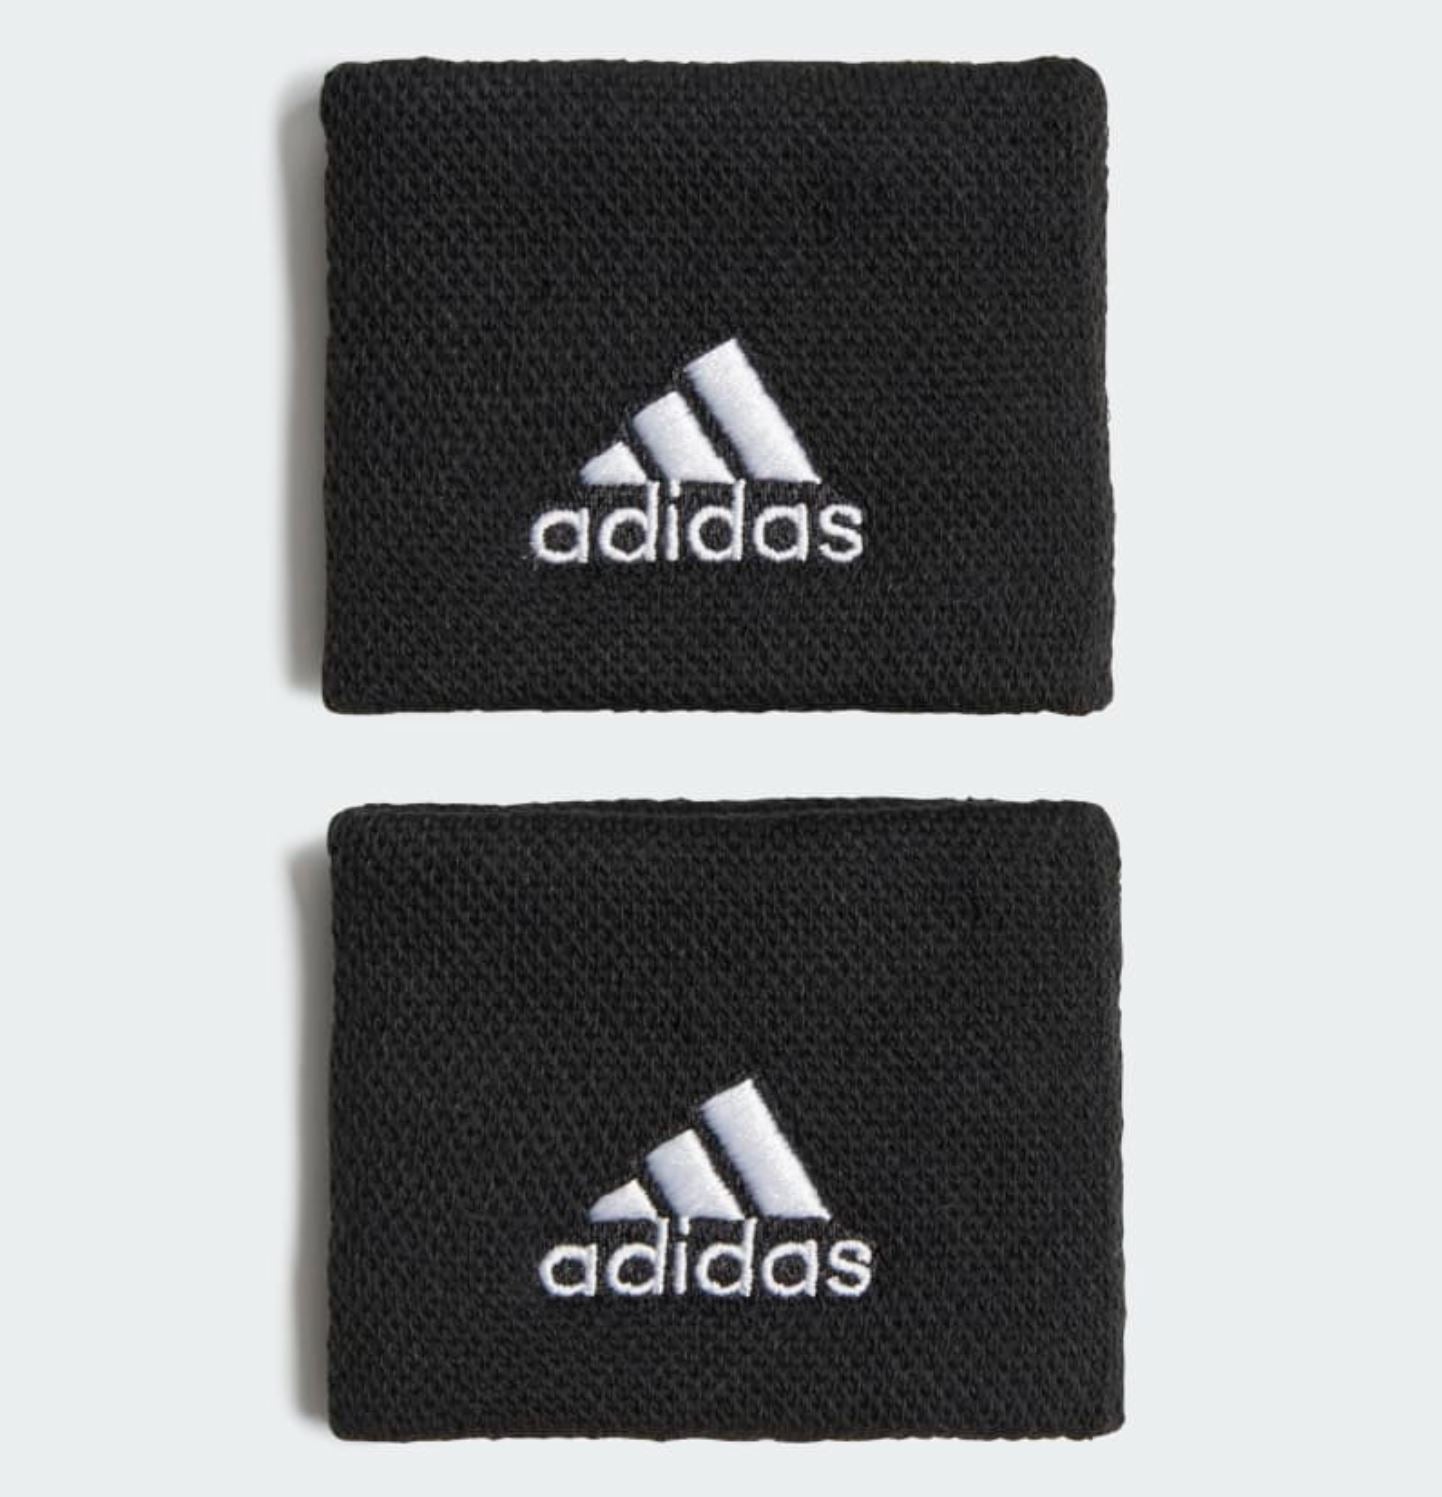 Adidas Wristband Small (Black)